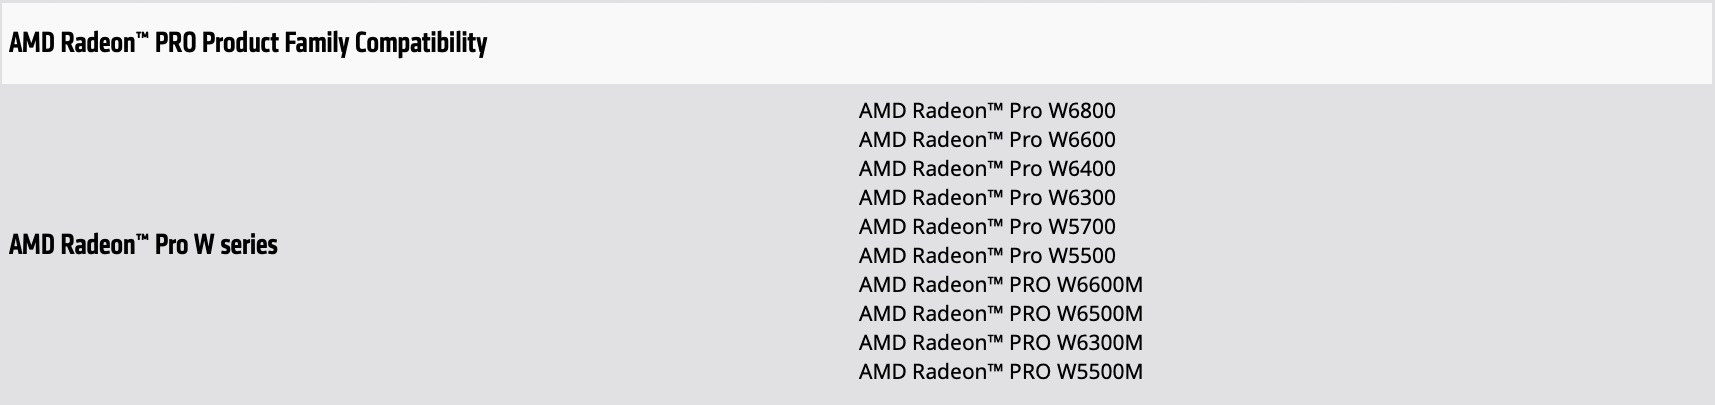 AMD Radeon Pro W6300